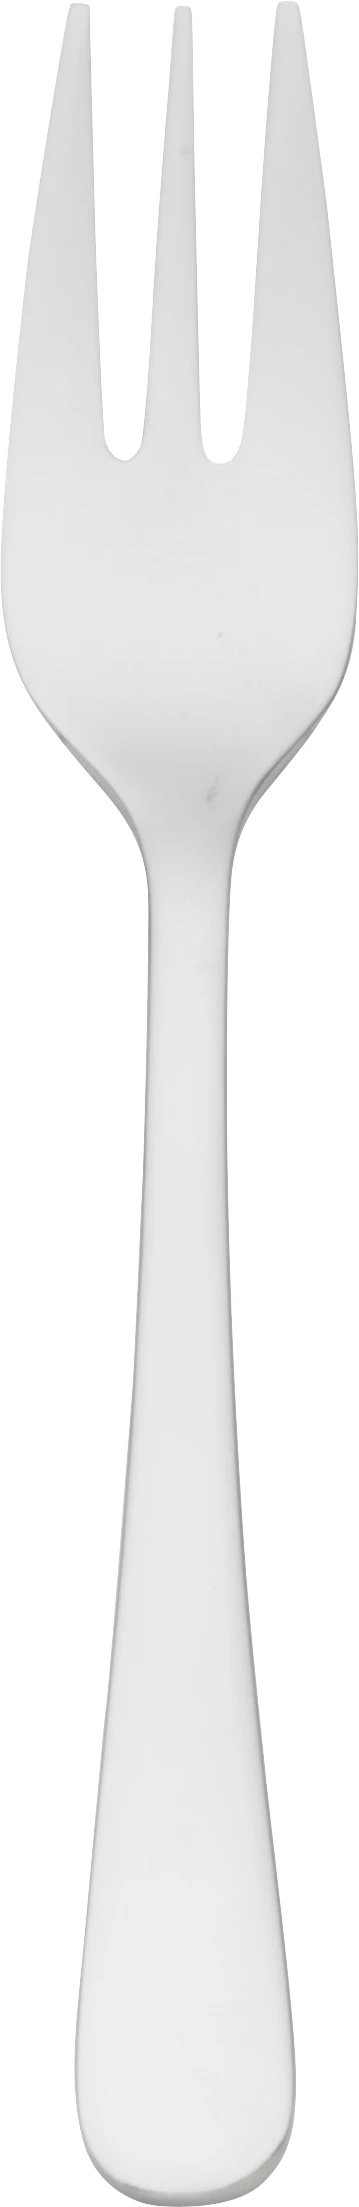 Classico kagegaffel, 14 cm